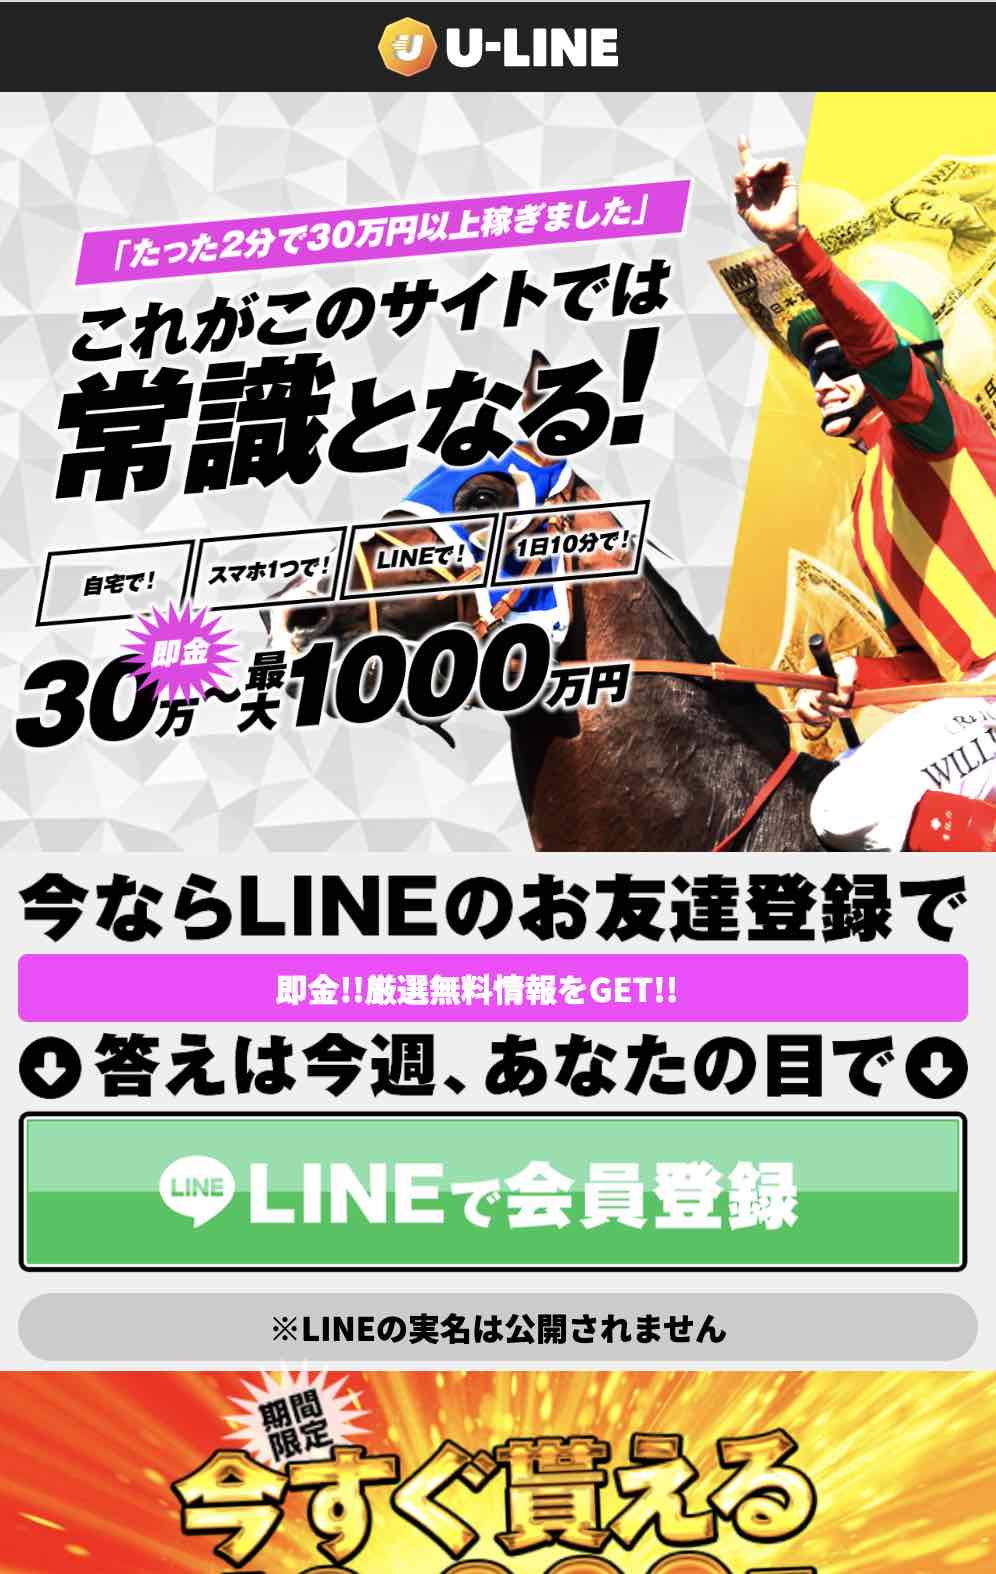 U-LINE(ユーライン)という競馬予想サイトの非会員ページ